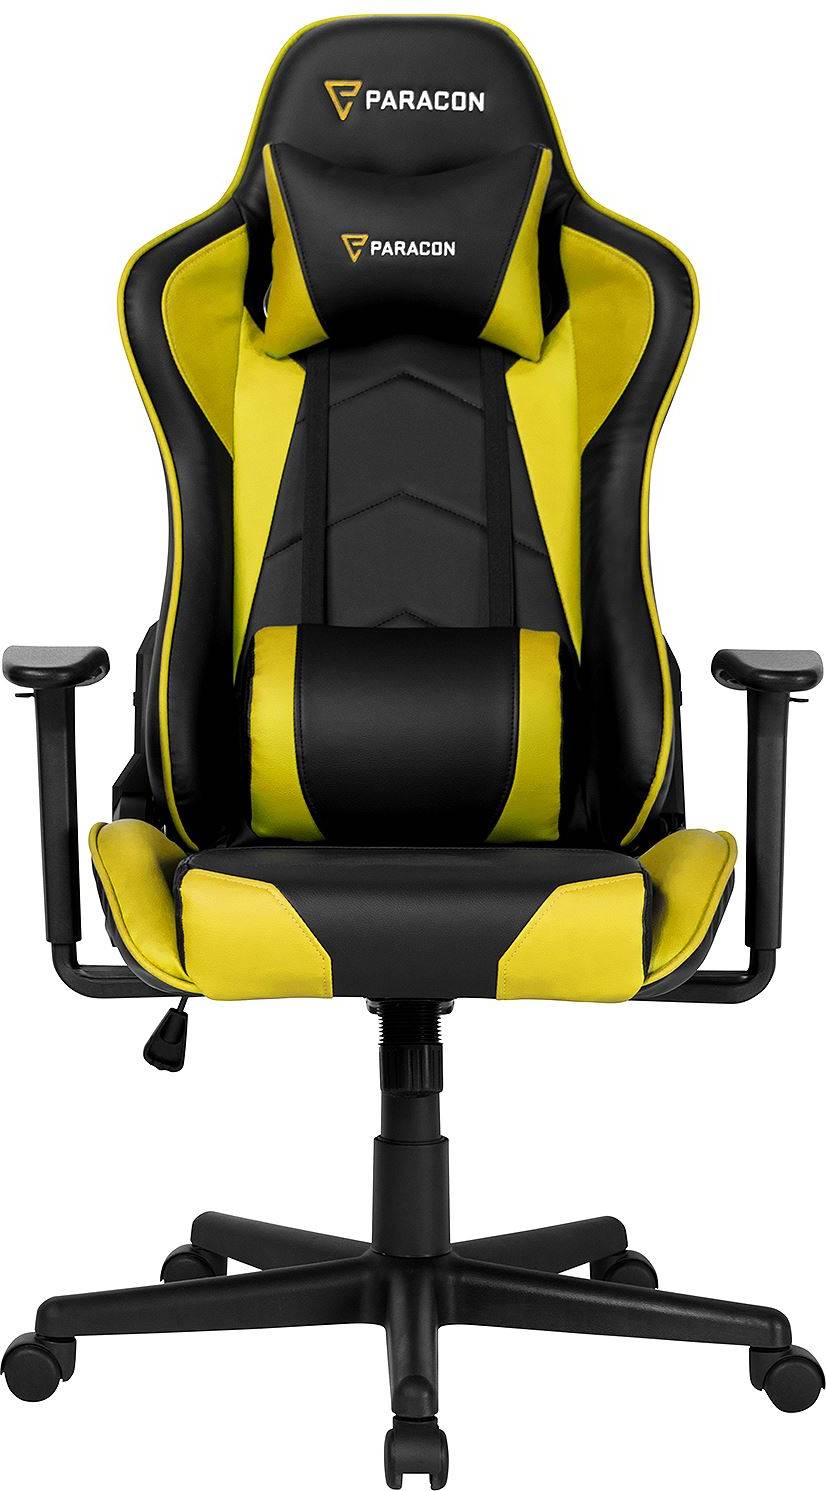  Bild på Paracon Brawler Gaming Chair - Black/Yellow gamingstol